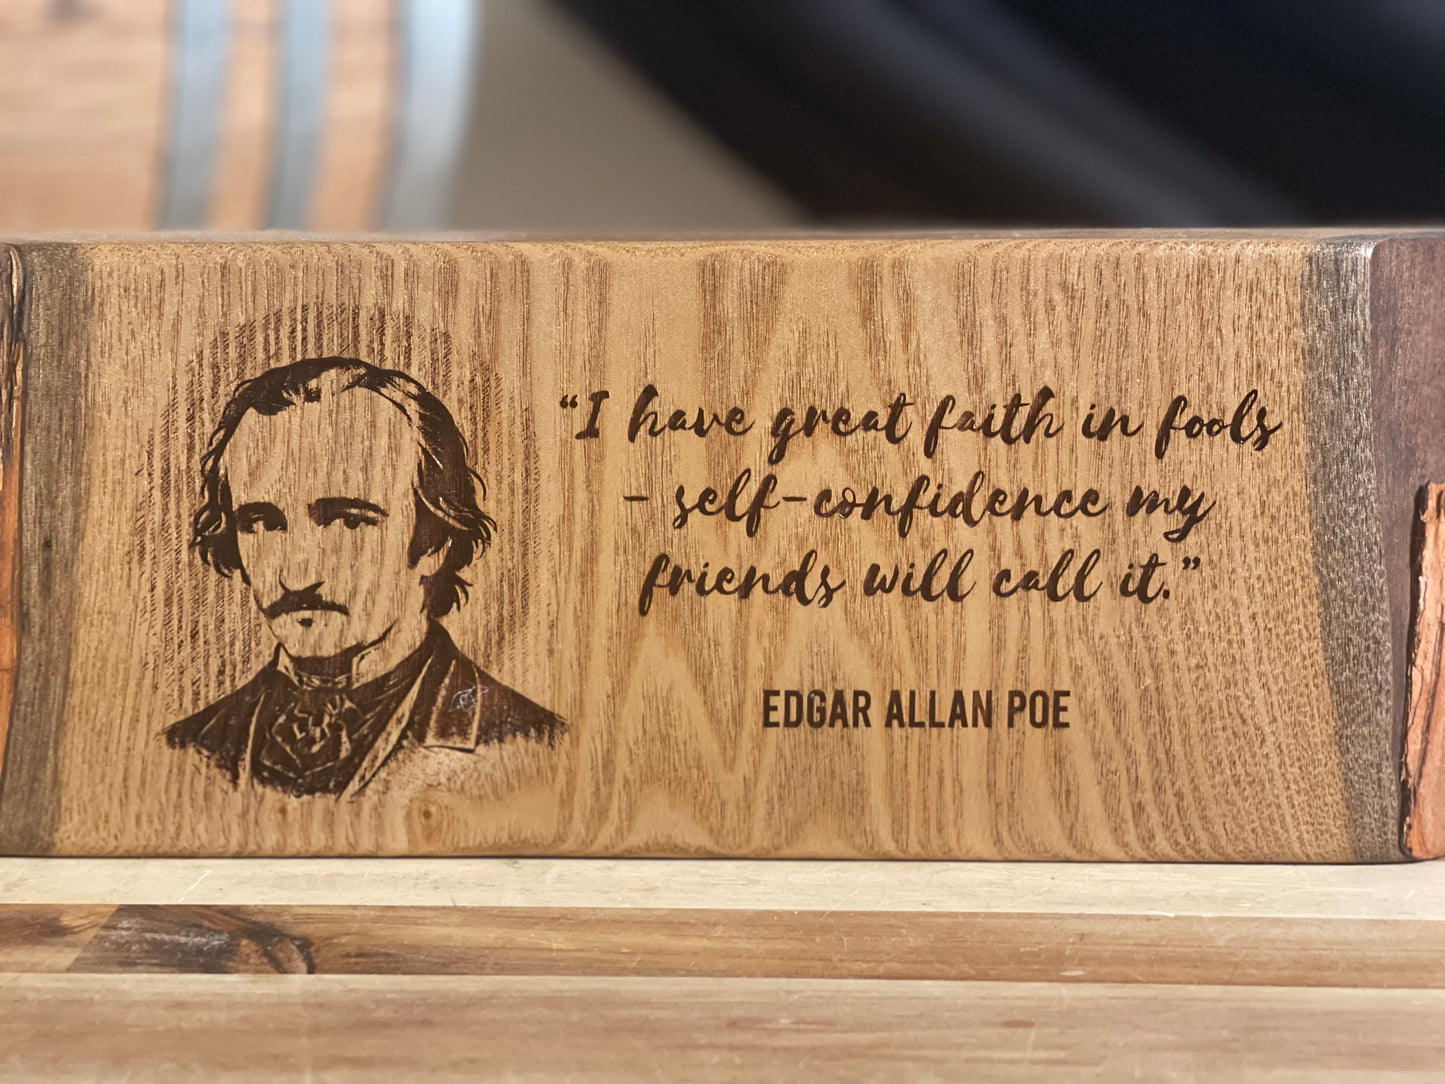 Self Confidence: Edgar Allan Poe quote